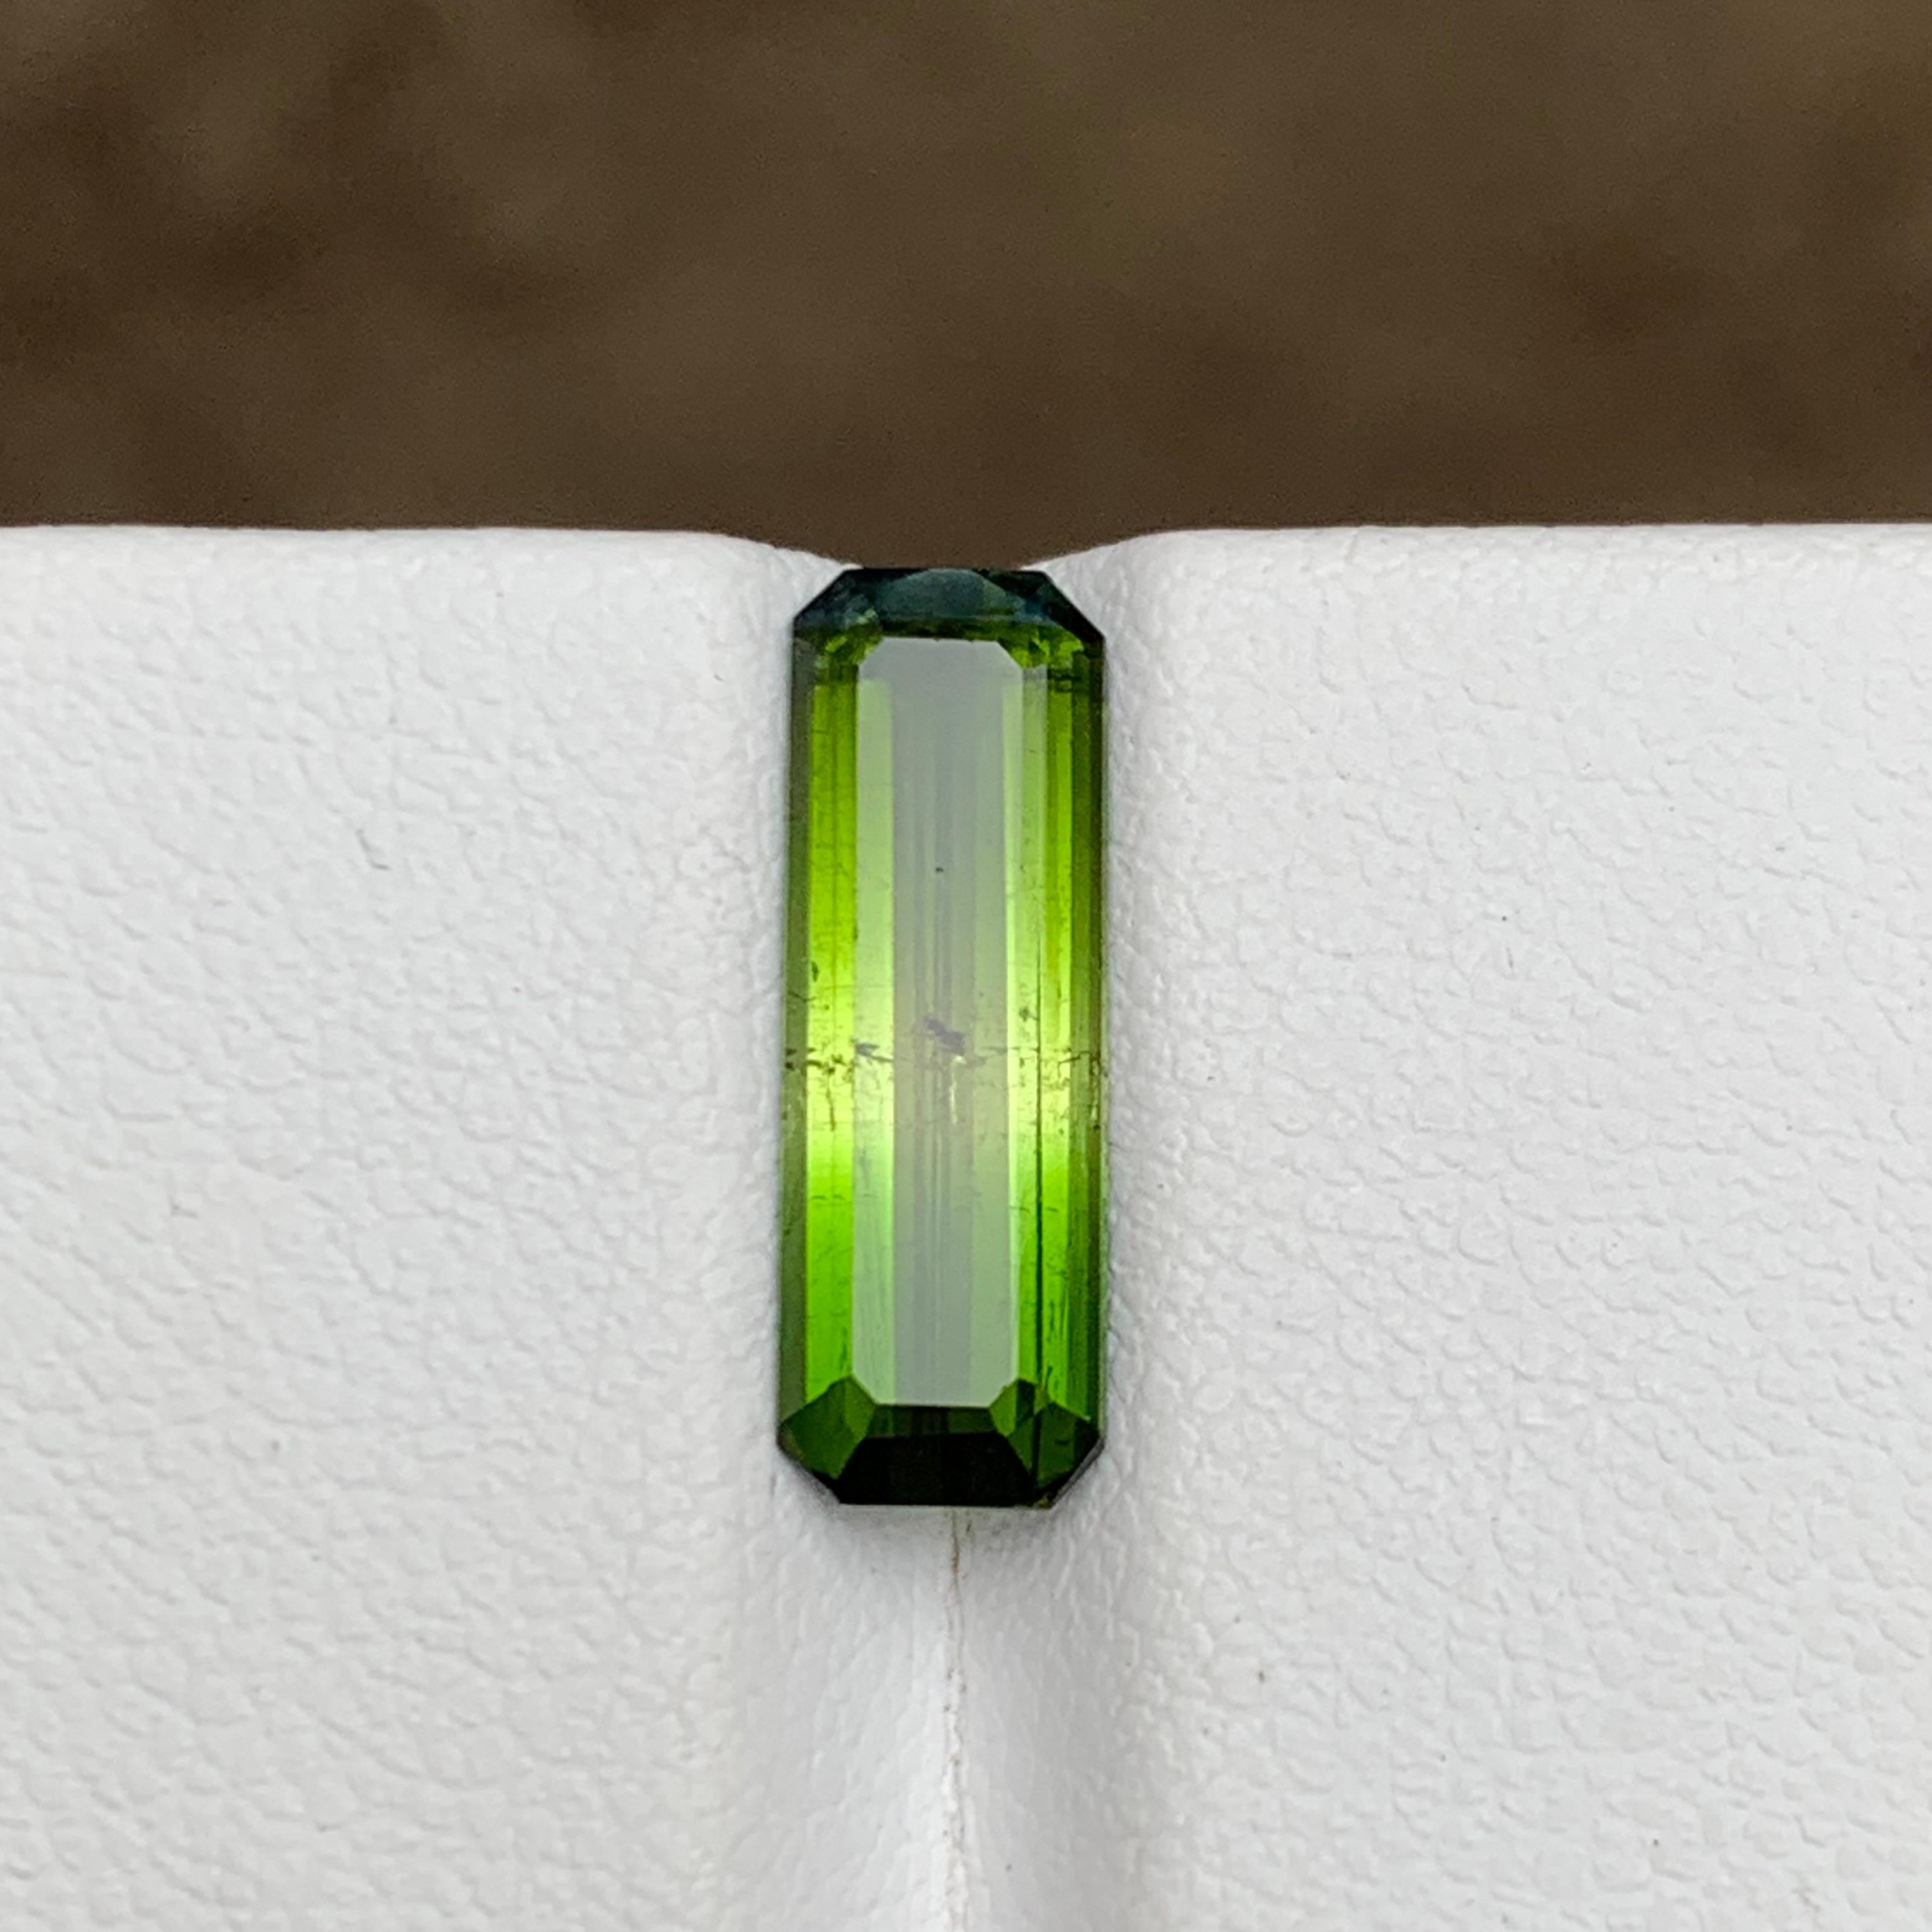 Rare Vivid Green & Yellow Hue Bicolor Tourmaline Gemstone, 3.15 Ct Emerald Cut For Sale 4